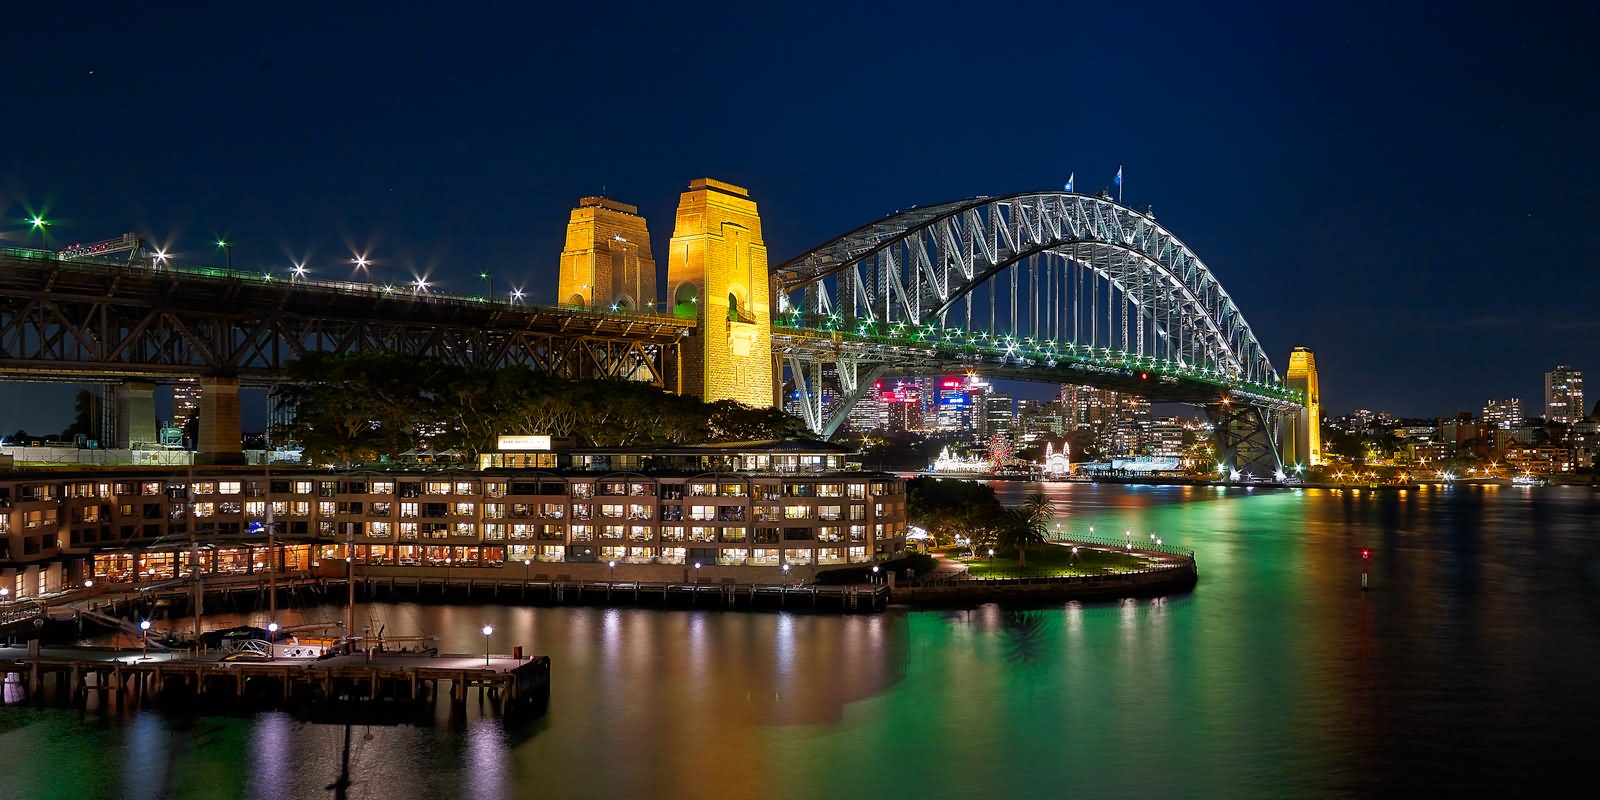 20 Sydney Harbour Bridge Night View Pictures And Photos